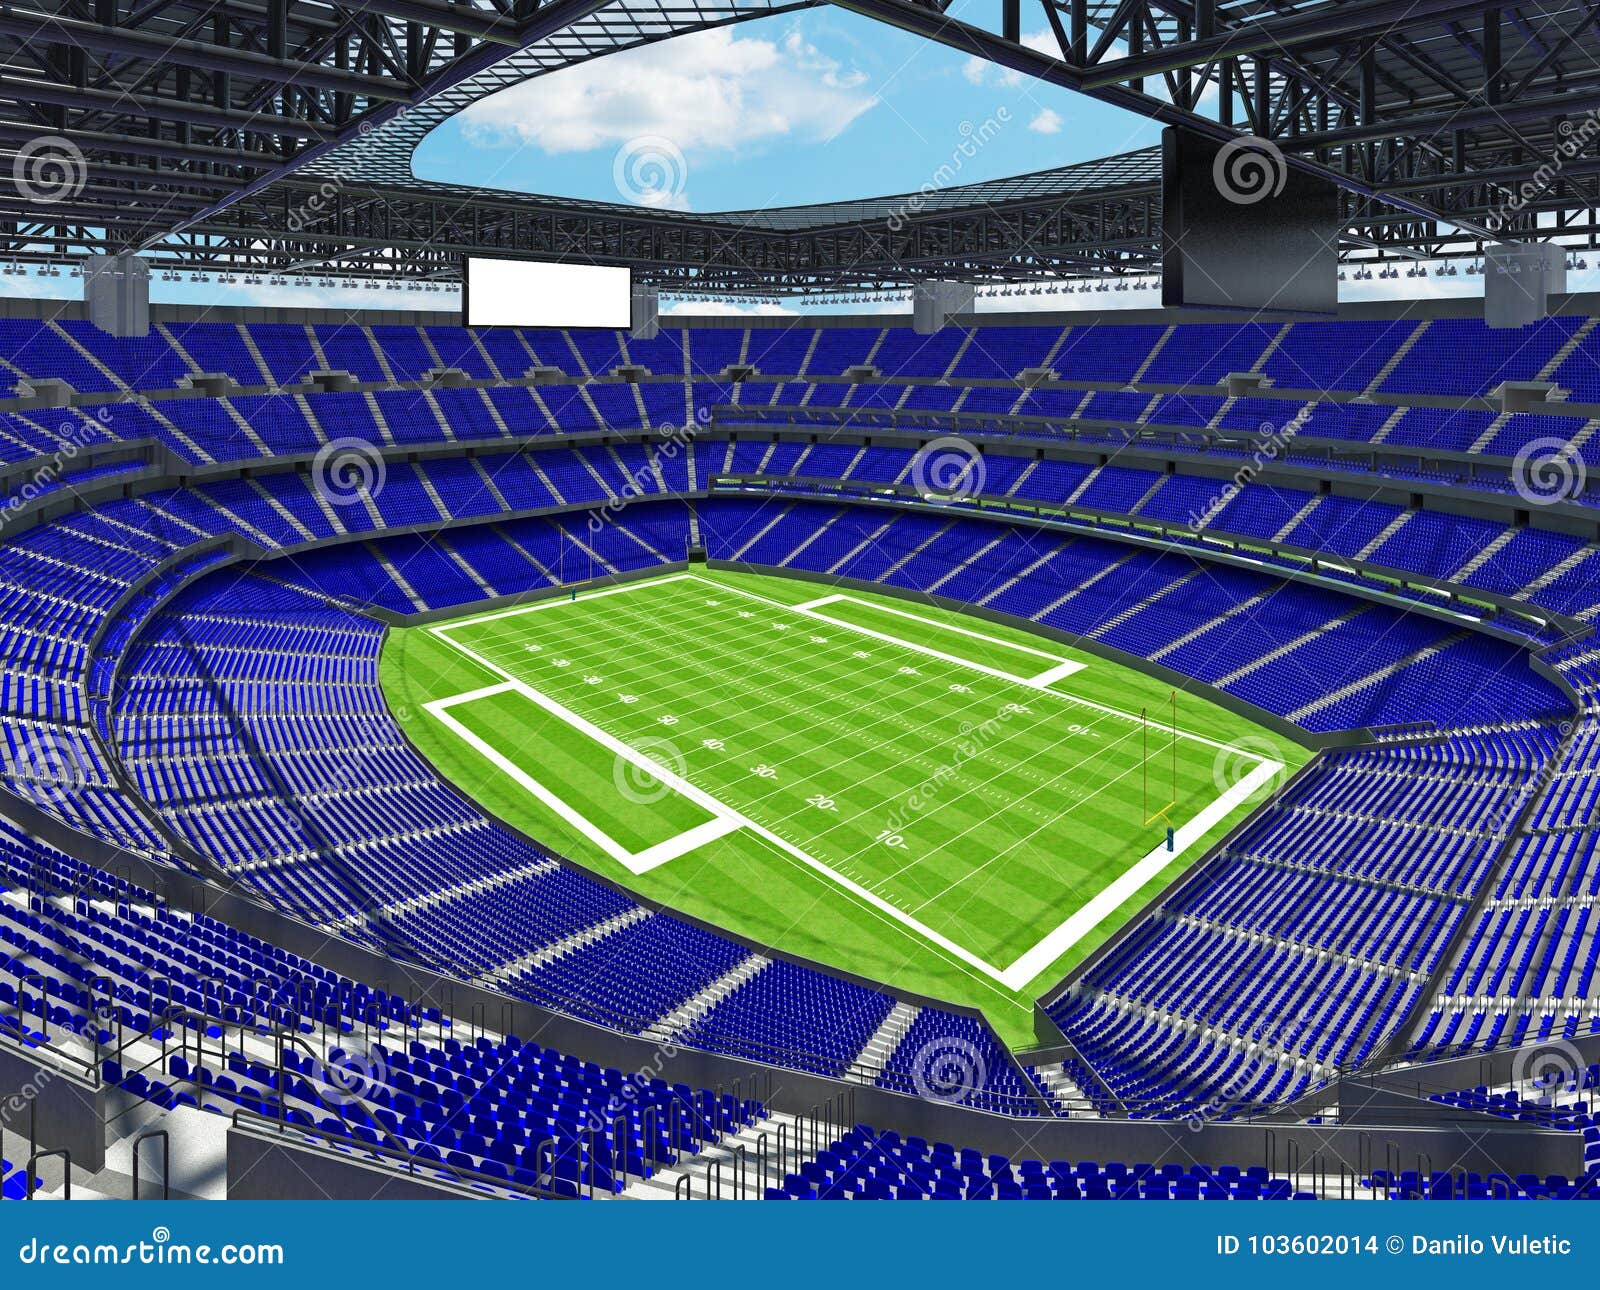 d-render-beautiful-modern-large-empty-american-football-stadium-blue-seats-vip-boxes-hundred-thousand-fans-three-103602014.jpg